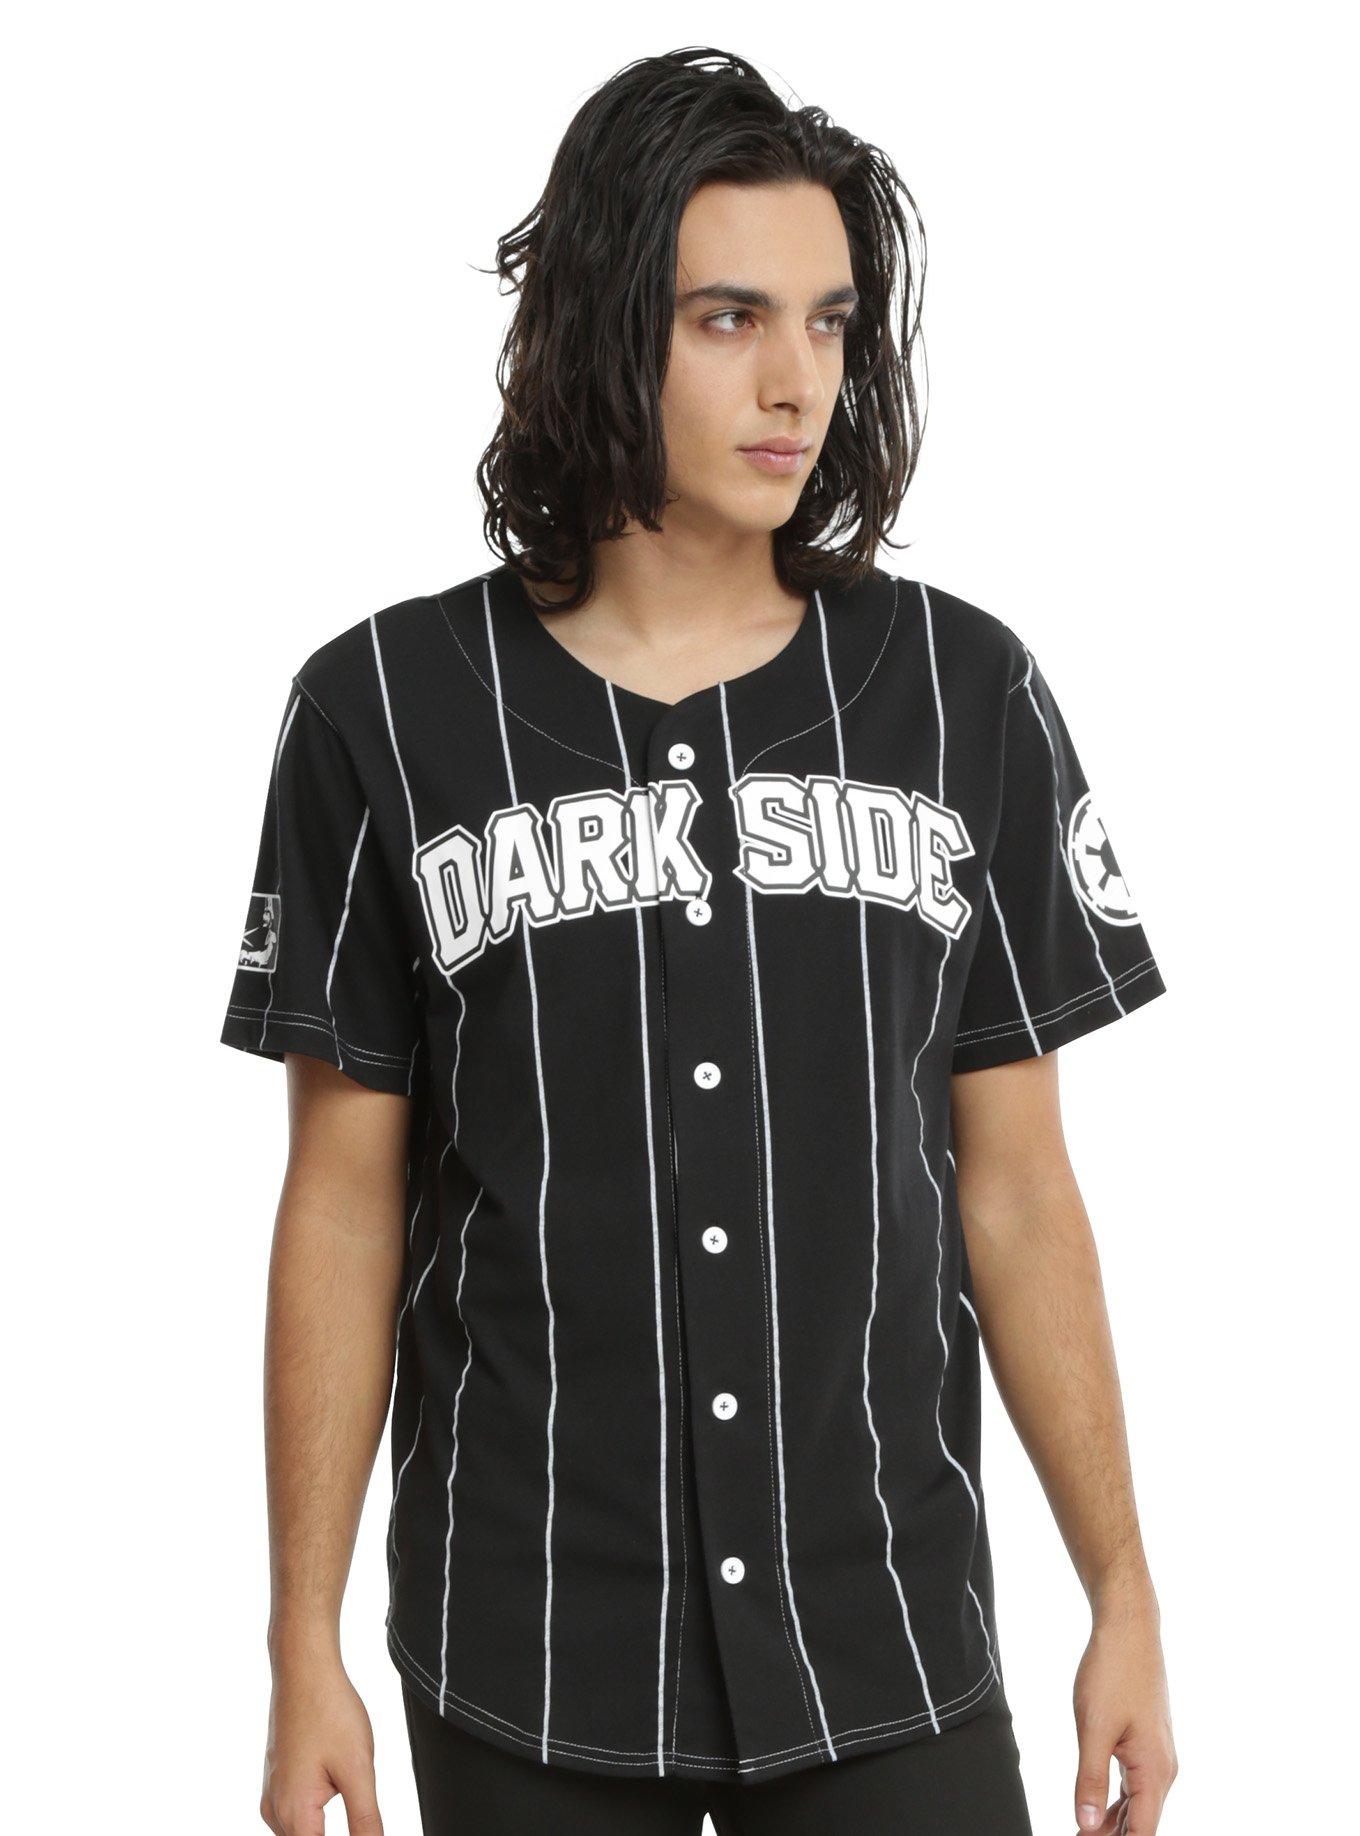 Star Wars Darkside Baseball Jersey